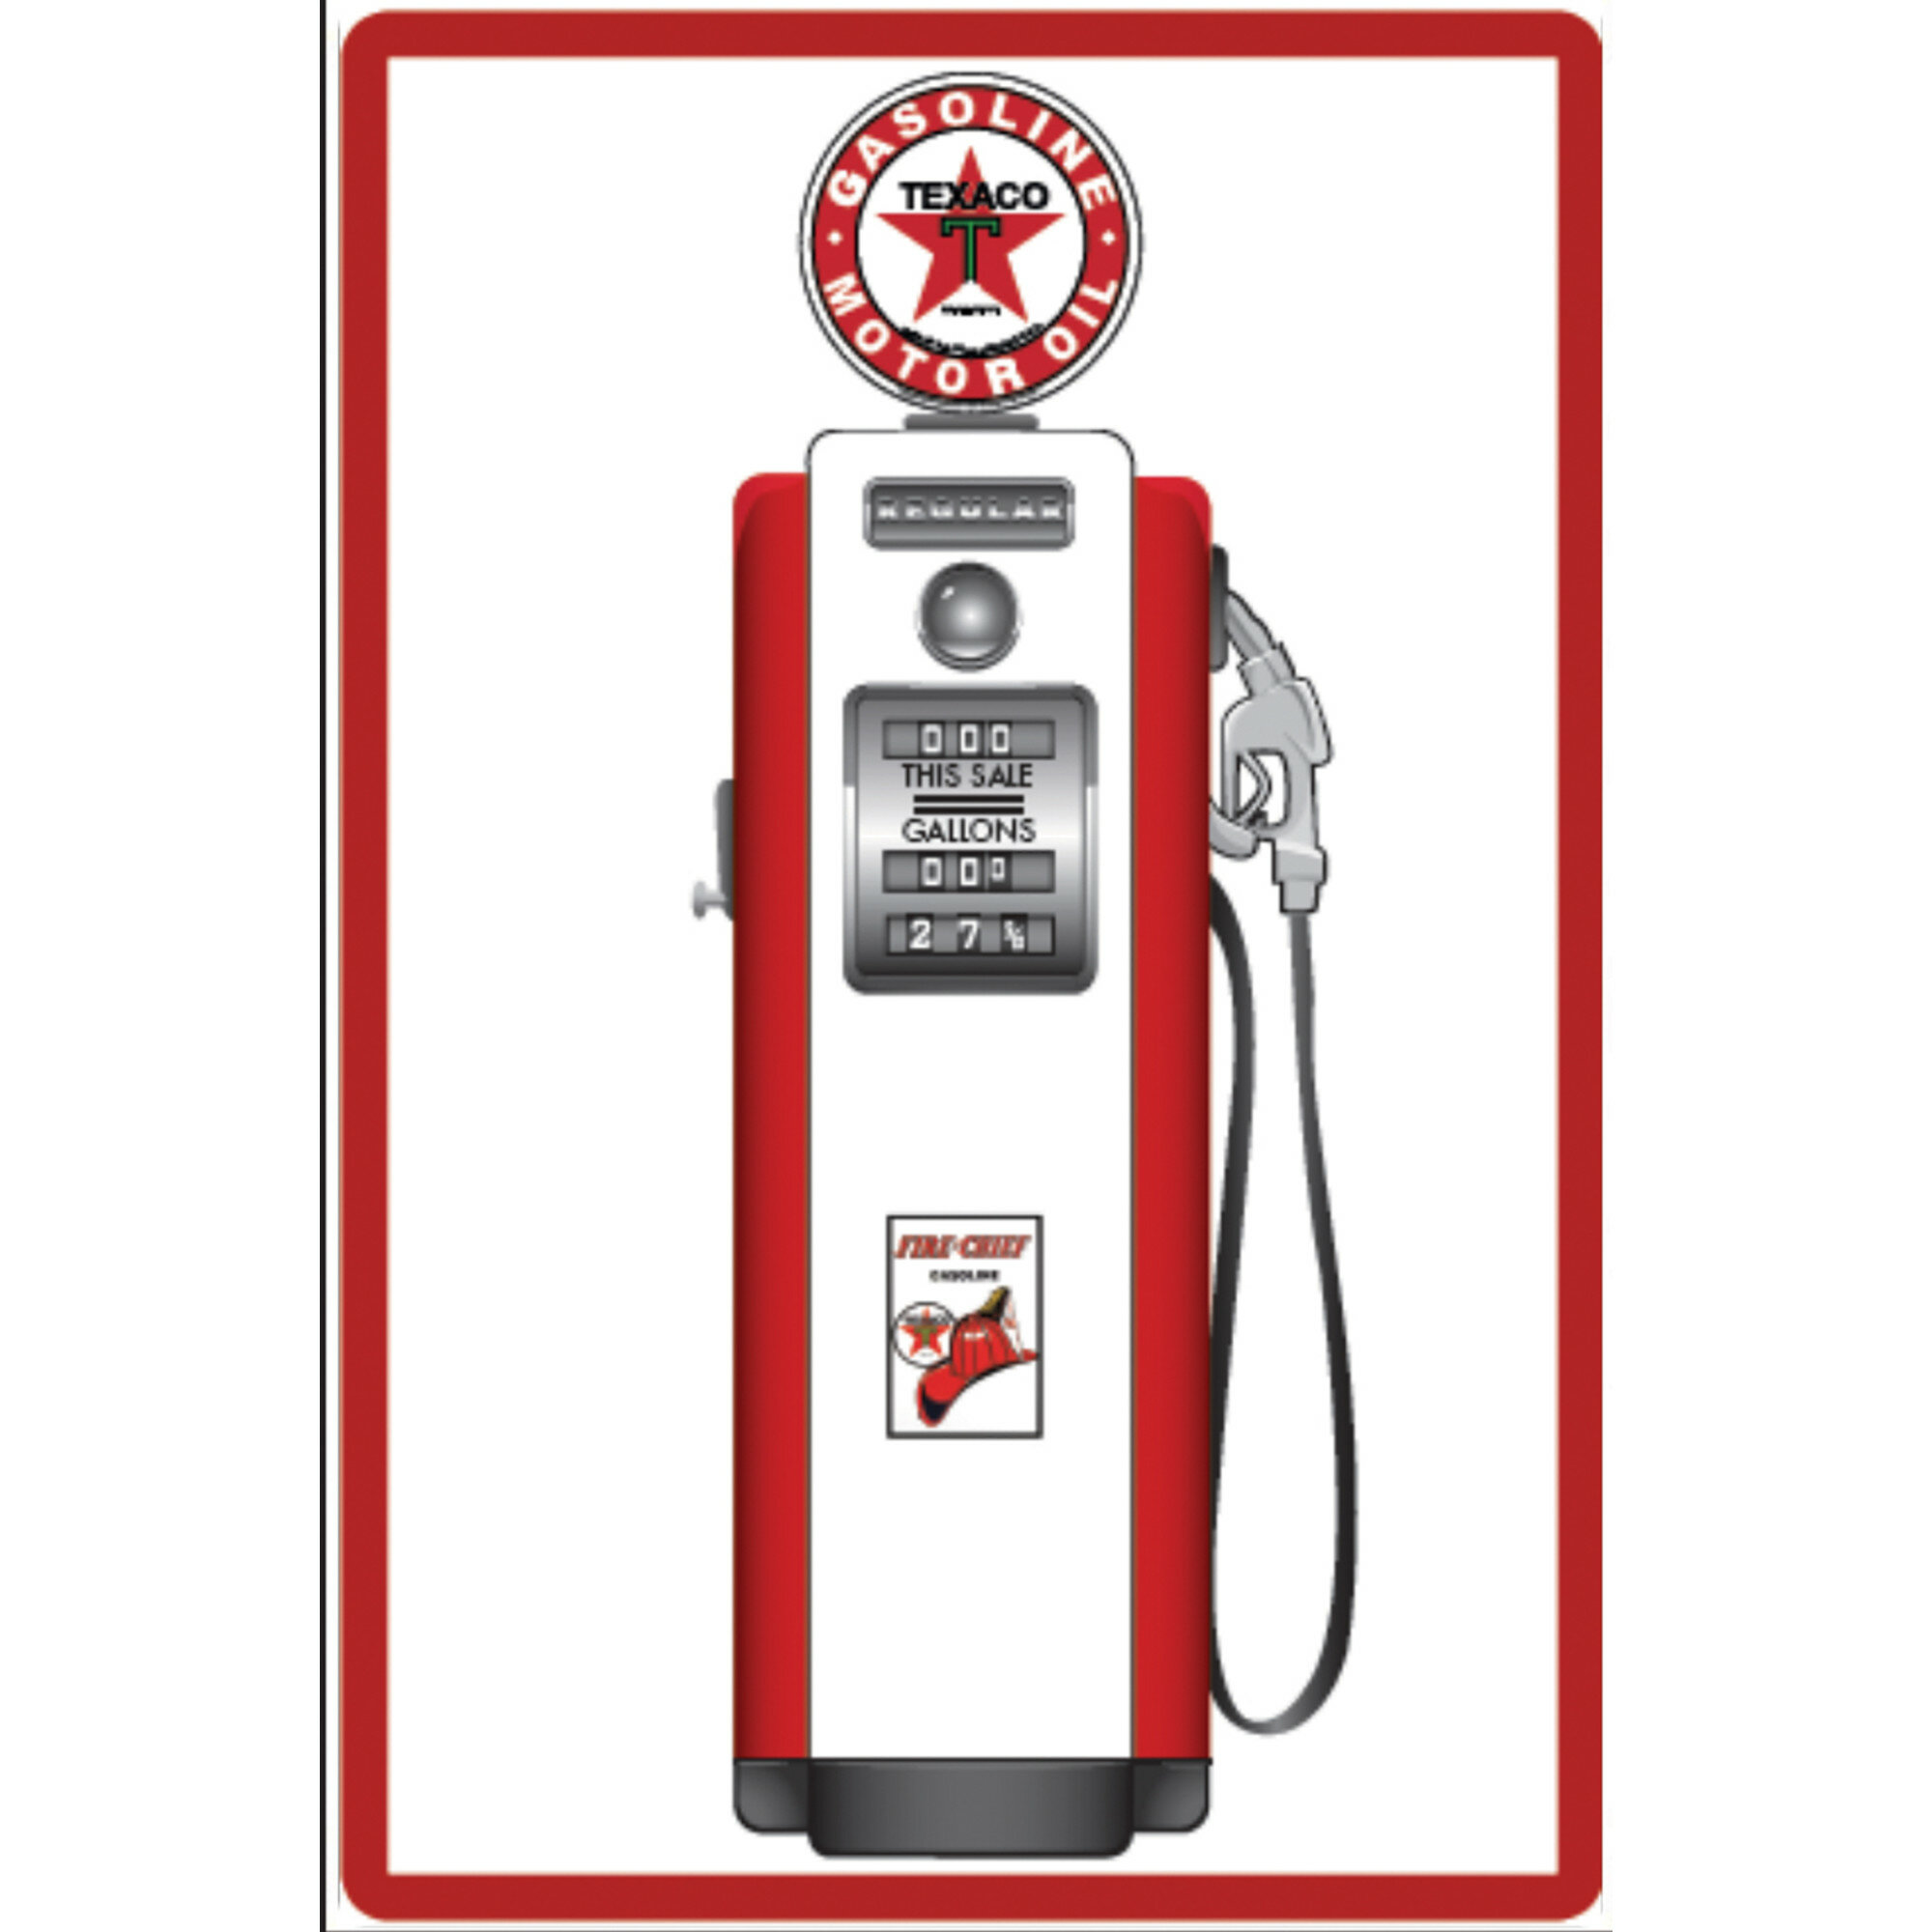 texaco gas pump for sale